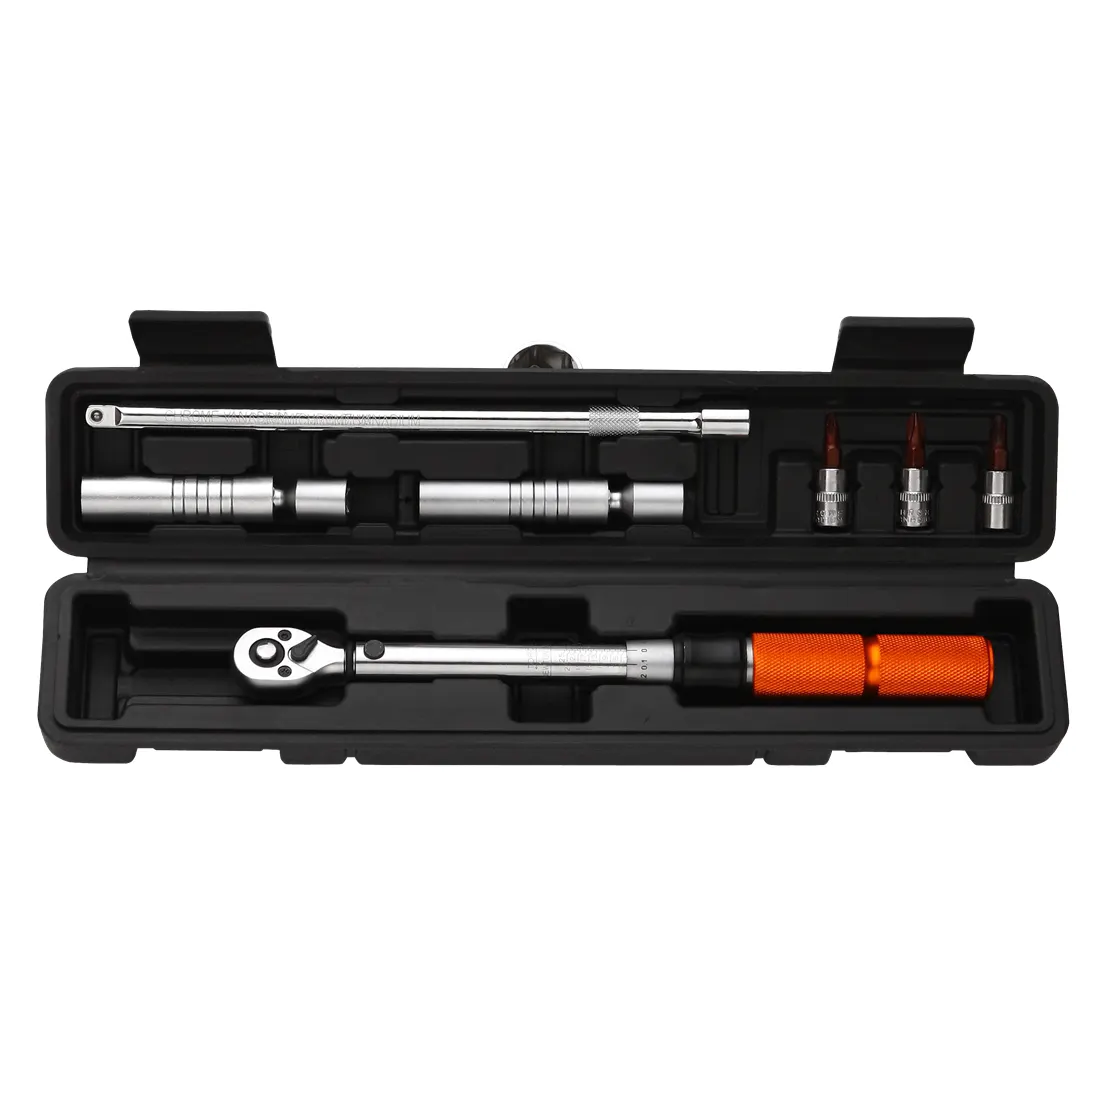 BGX Professional home hardware tool set kit 7pcs 3/8" Torque wrench